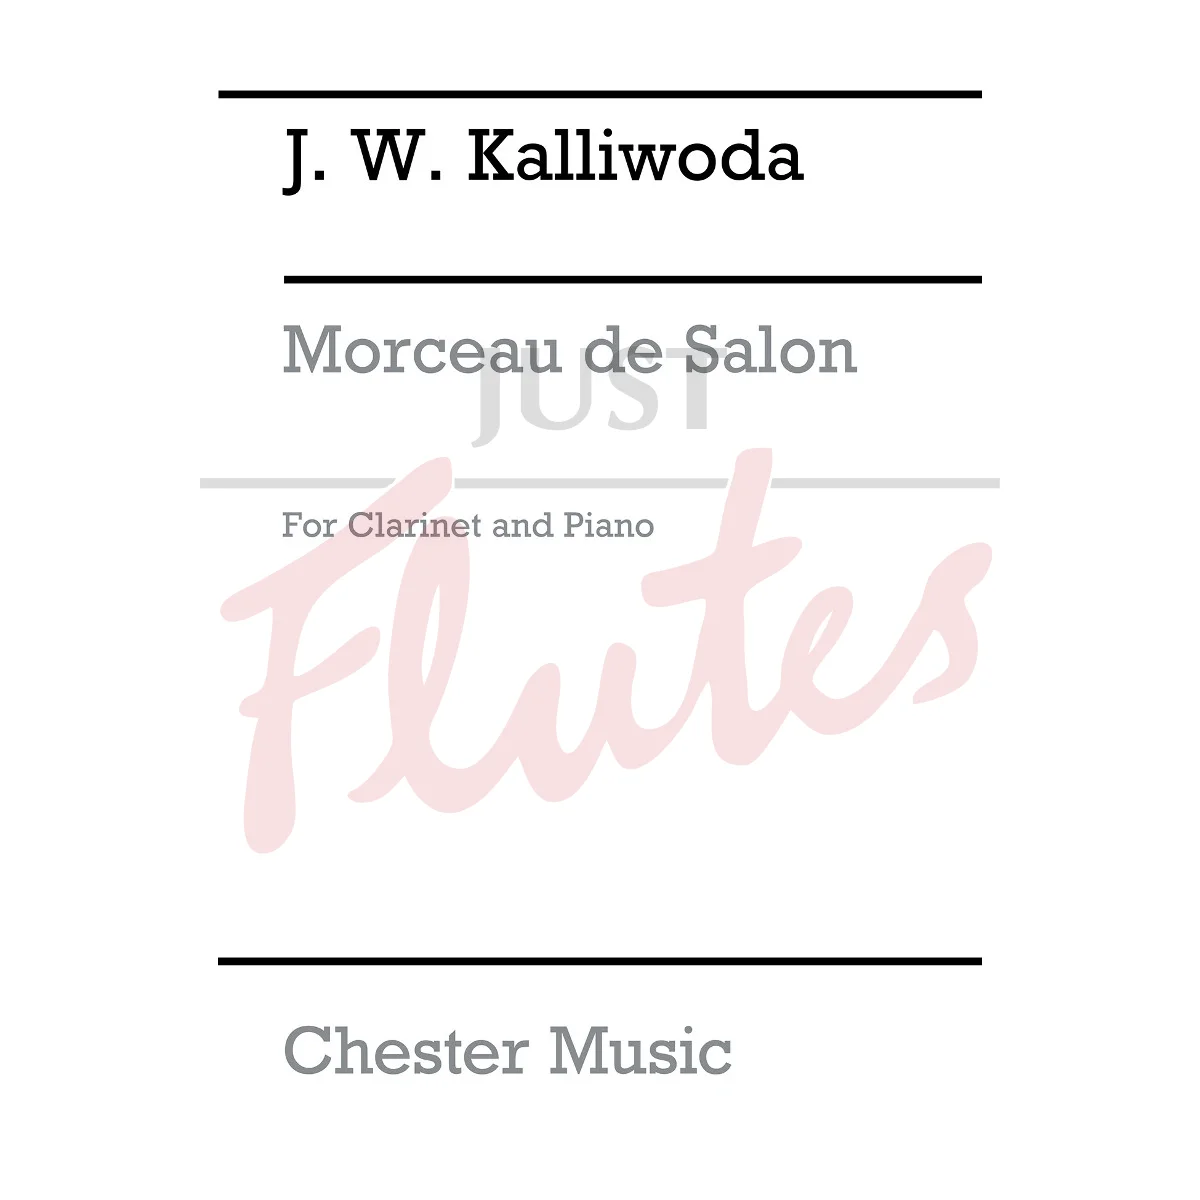 Morceau de Salon for Clarinet and Piano